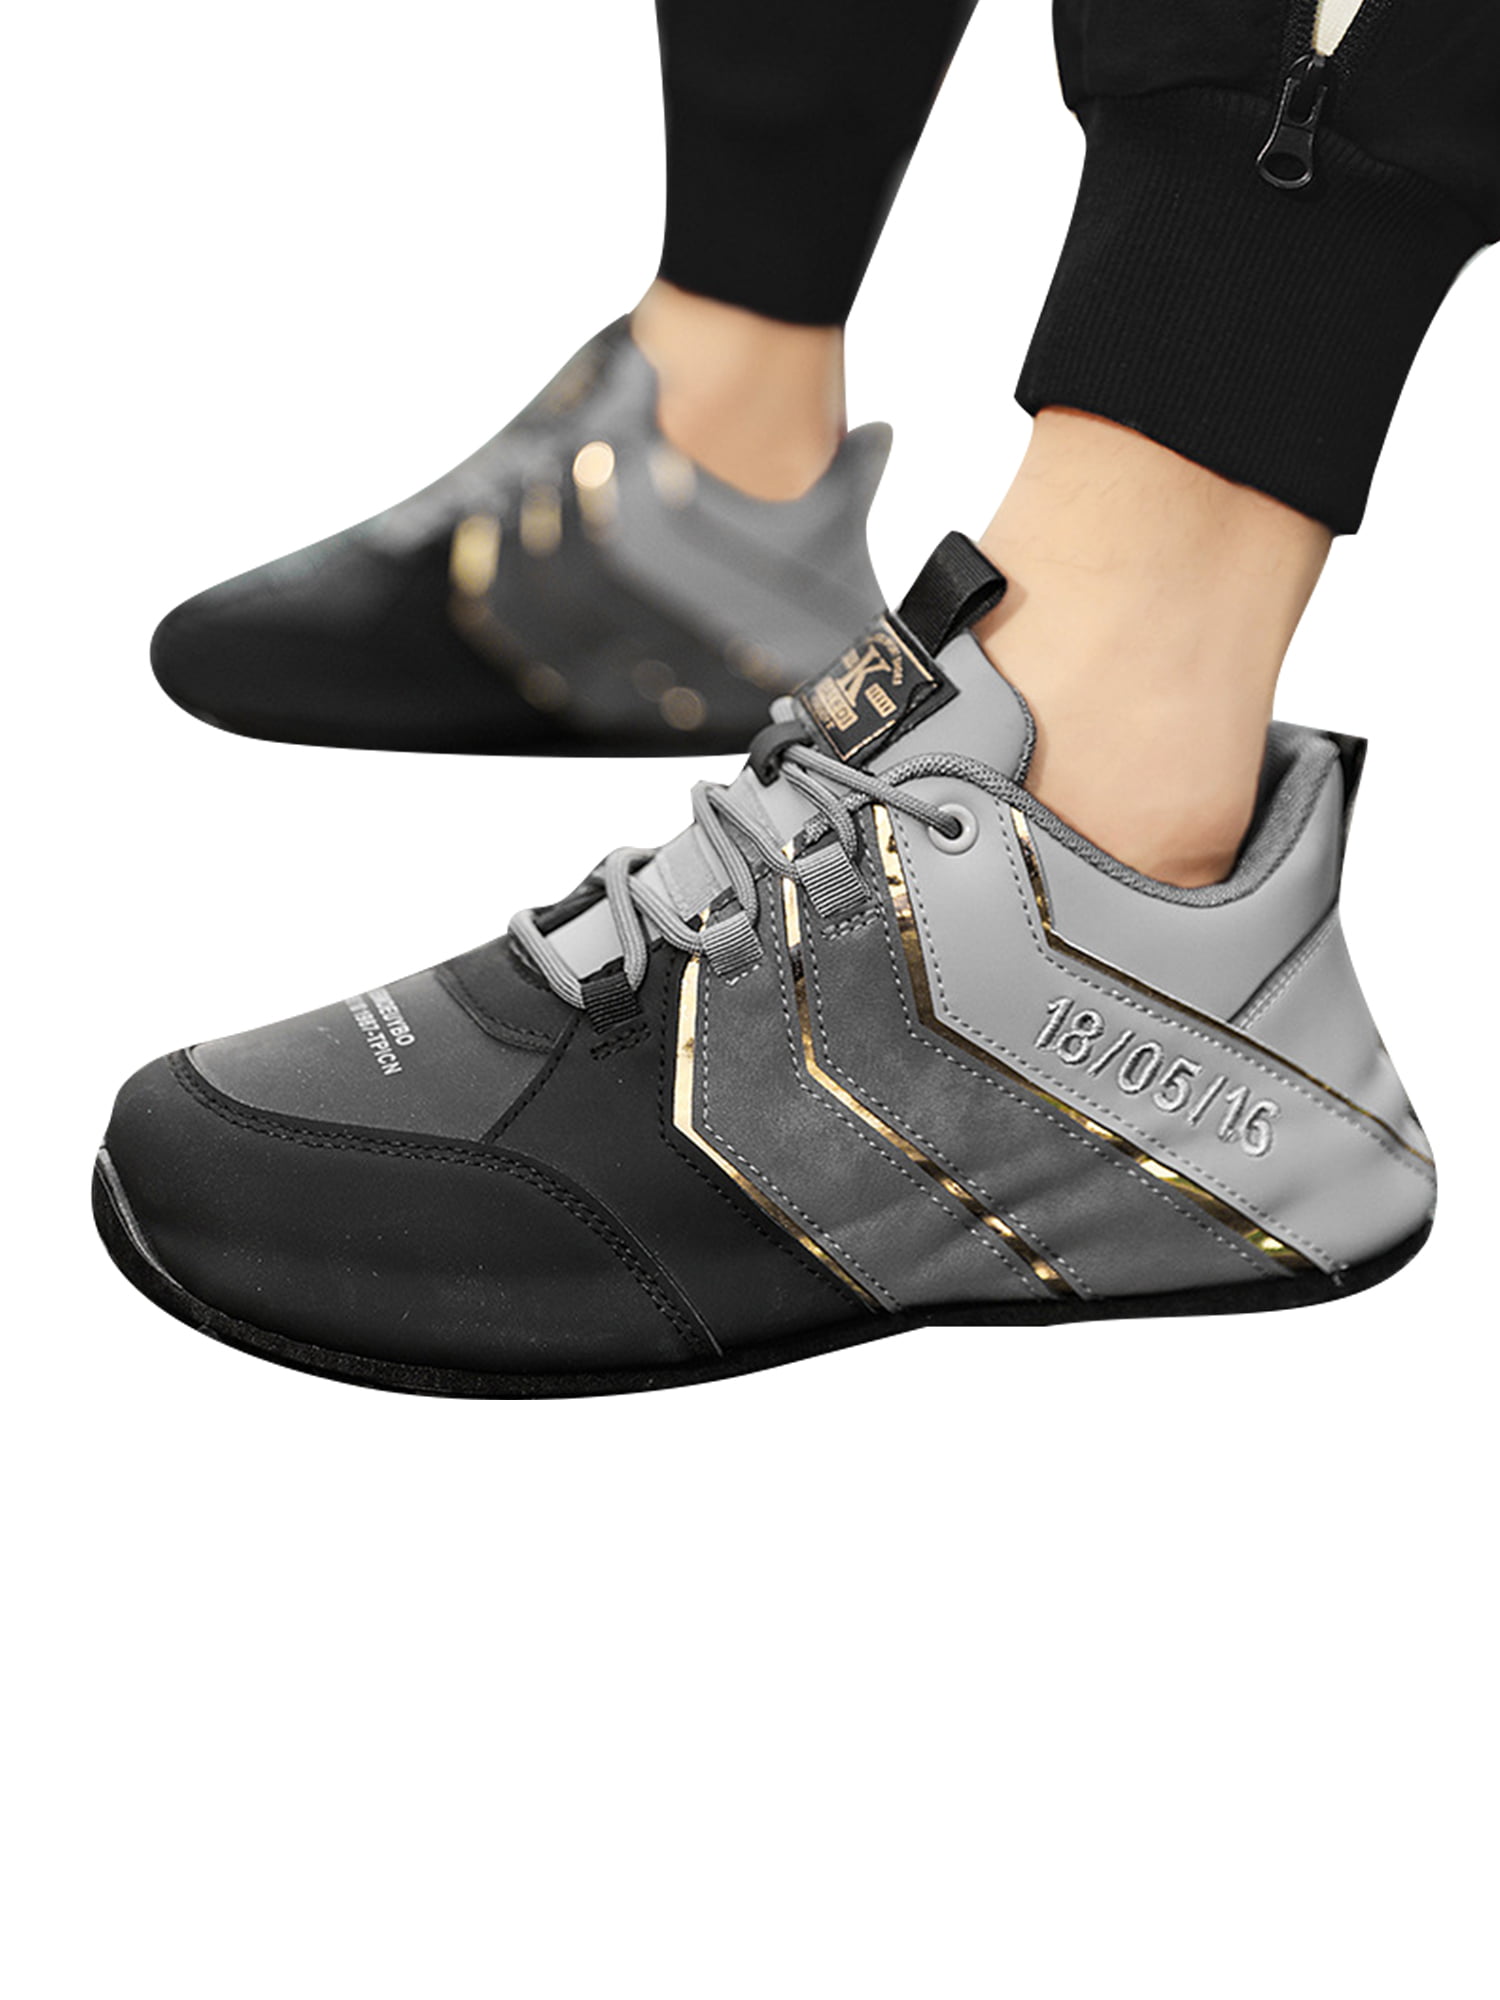 Eloshman Men's Comfort Round Toe Fashion Sneakers